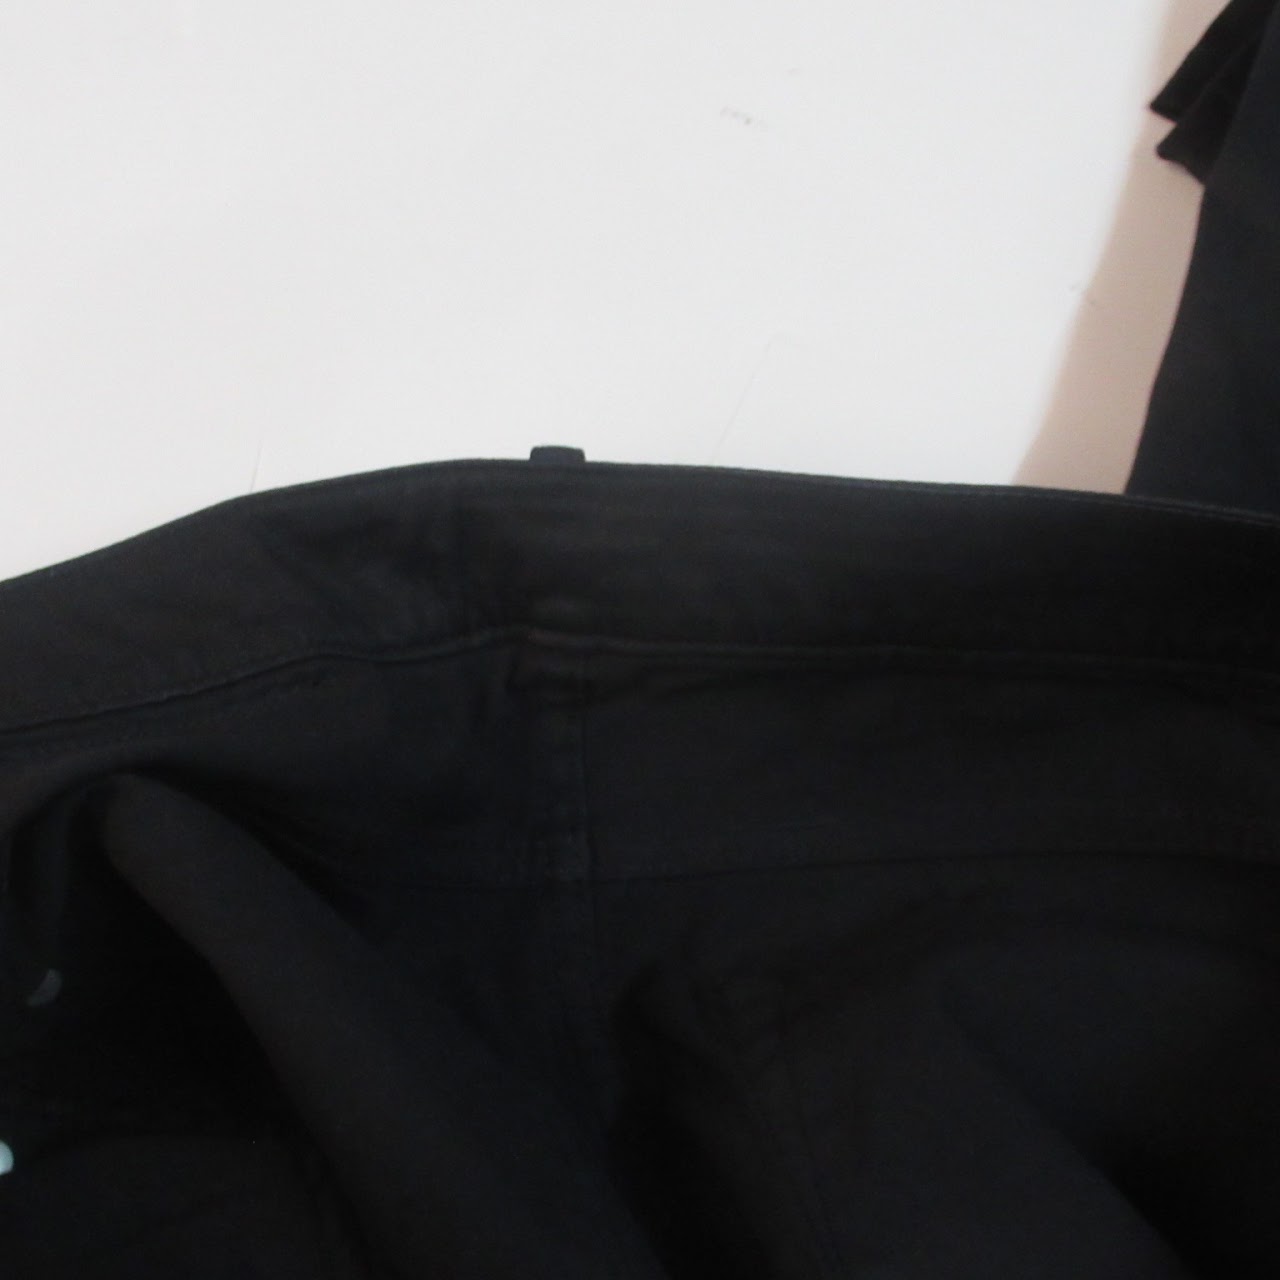 Balenciaga Black Denim Jeans